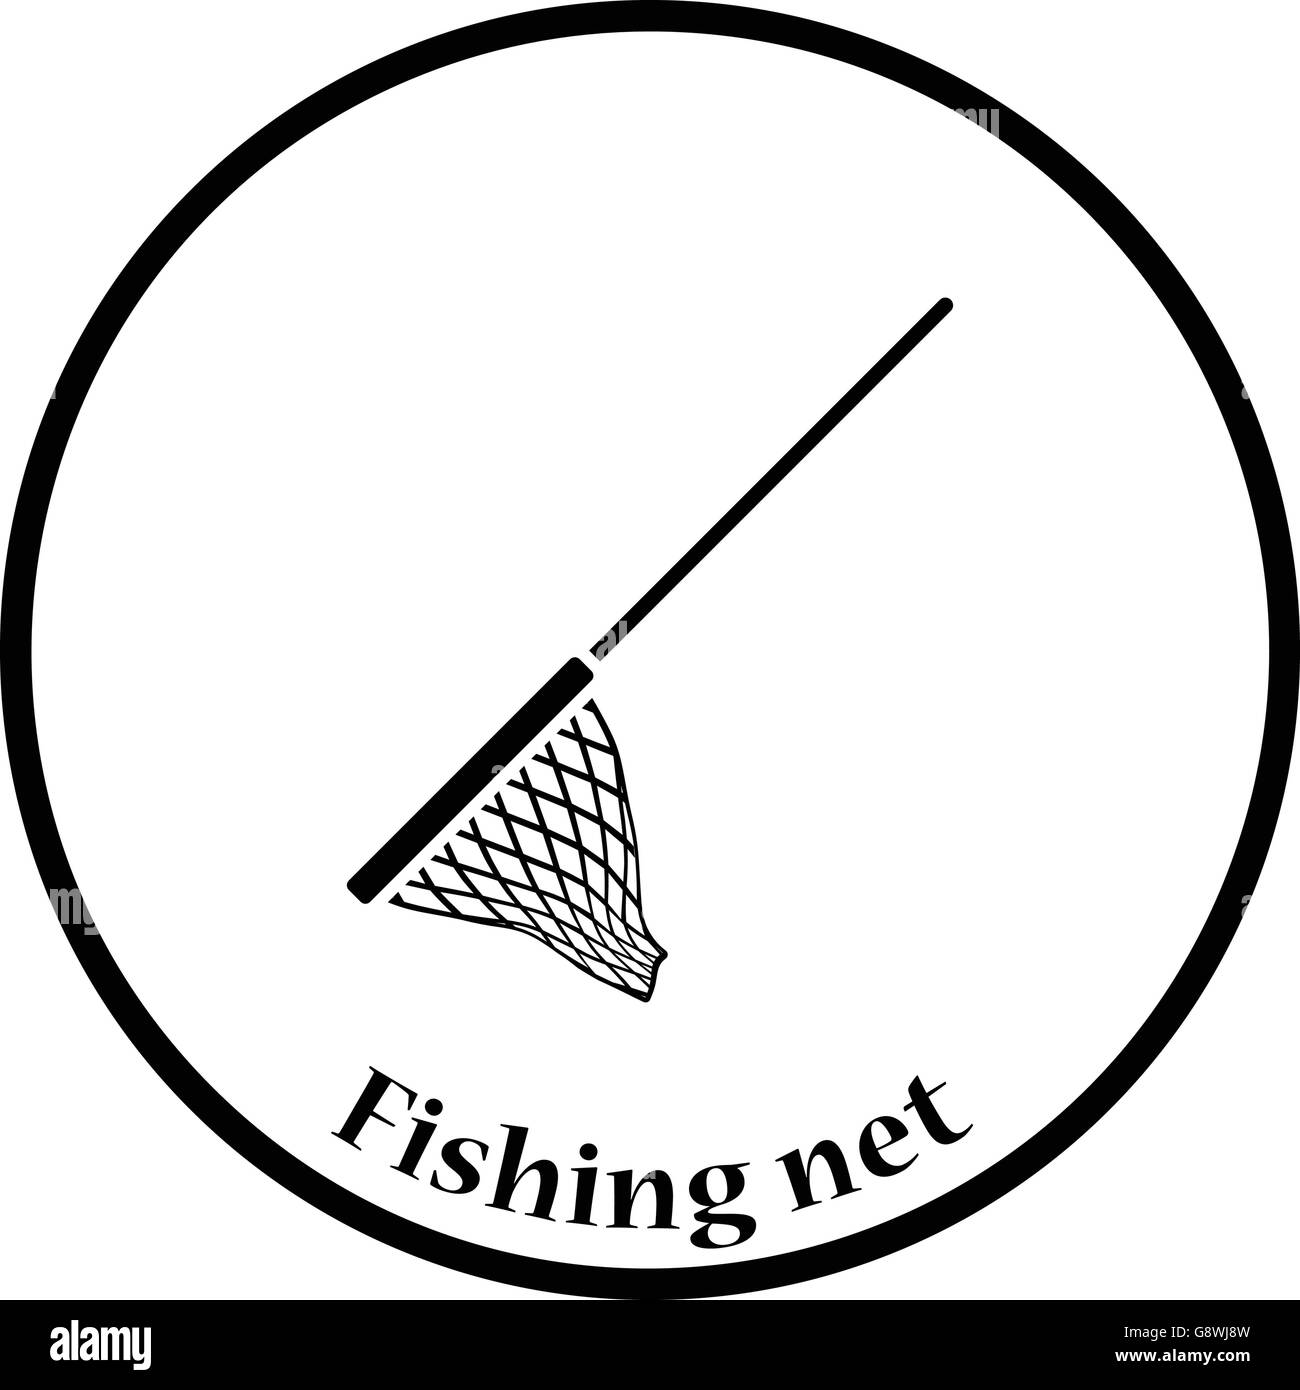 Icon of Fishing net . Thin circle design. Vector illustration